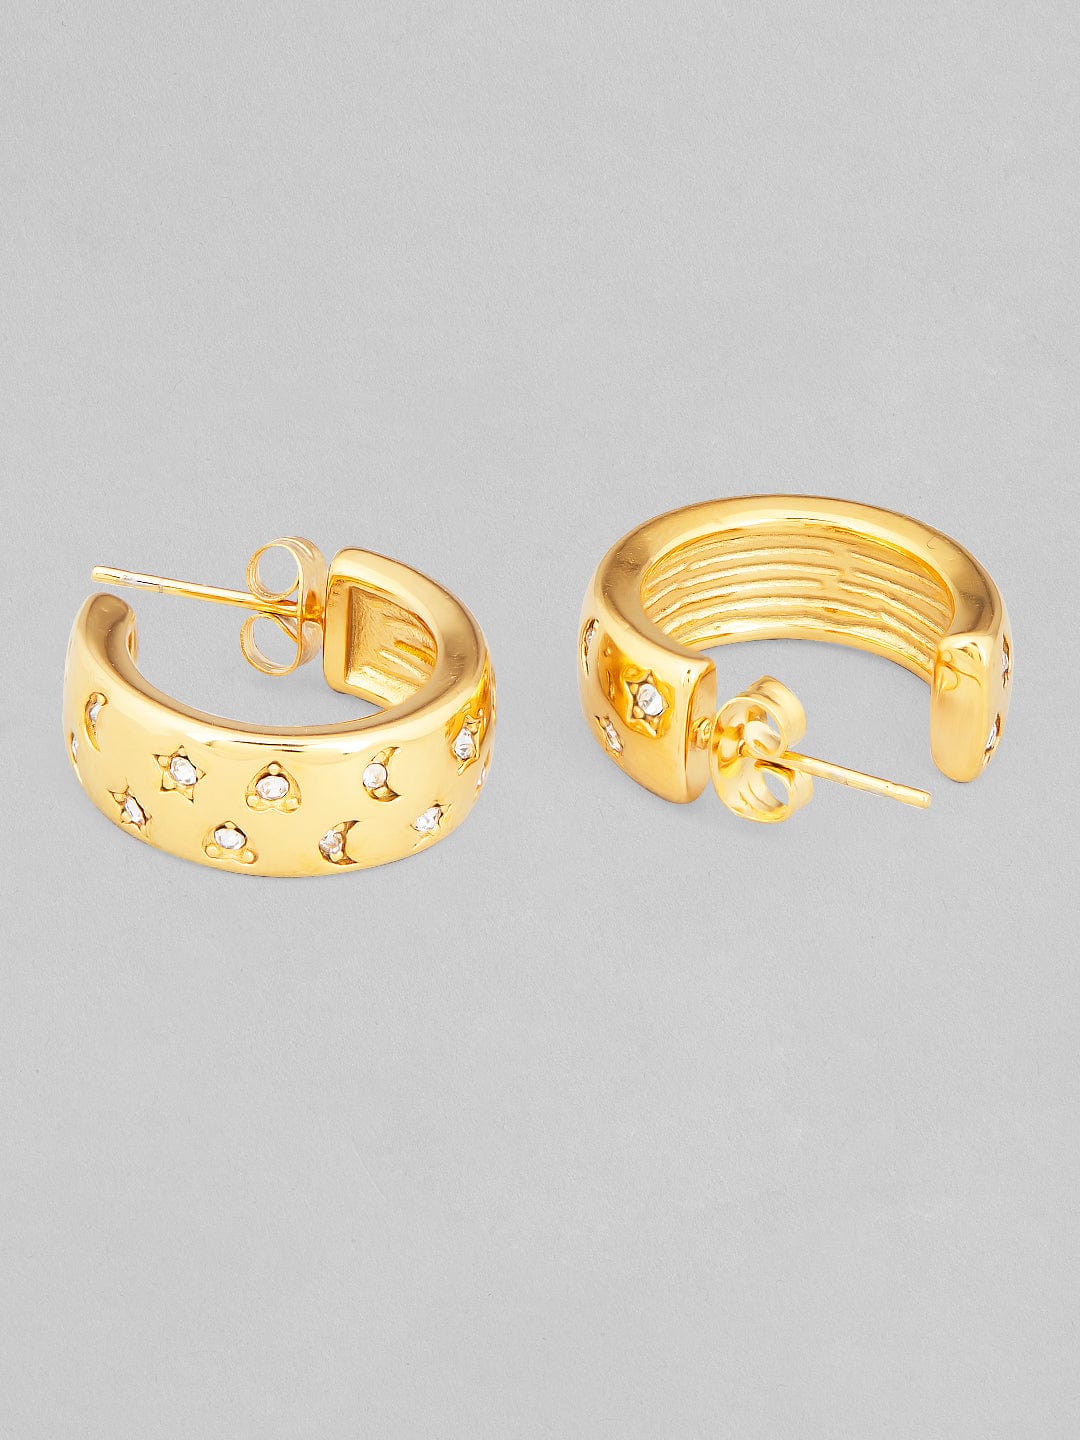 Malabar Gold & Diamonds 22Kt Yellow Gold Hoop Earrings For Women :  Amazon.in: Fashion